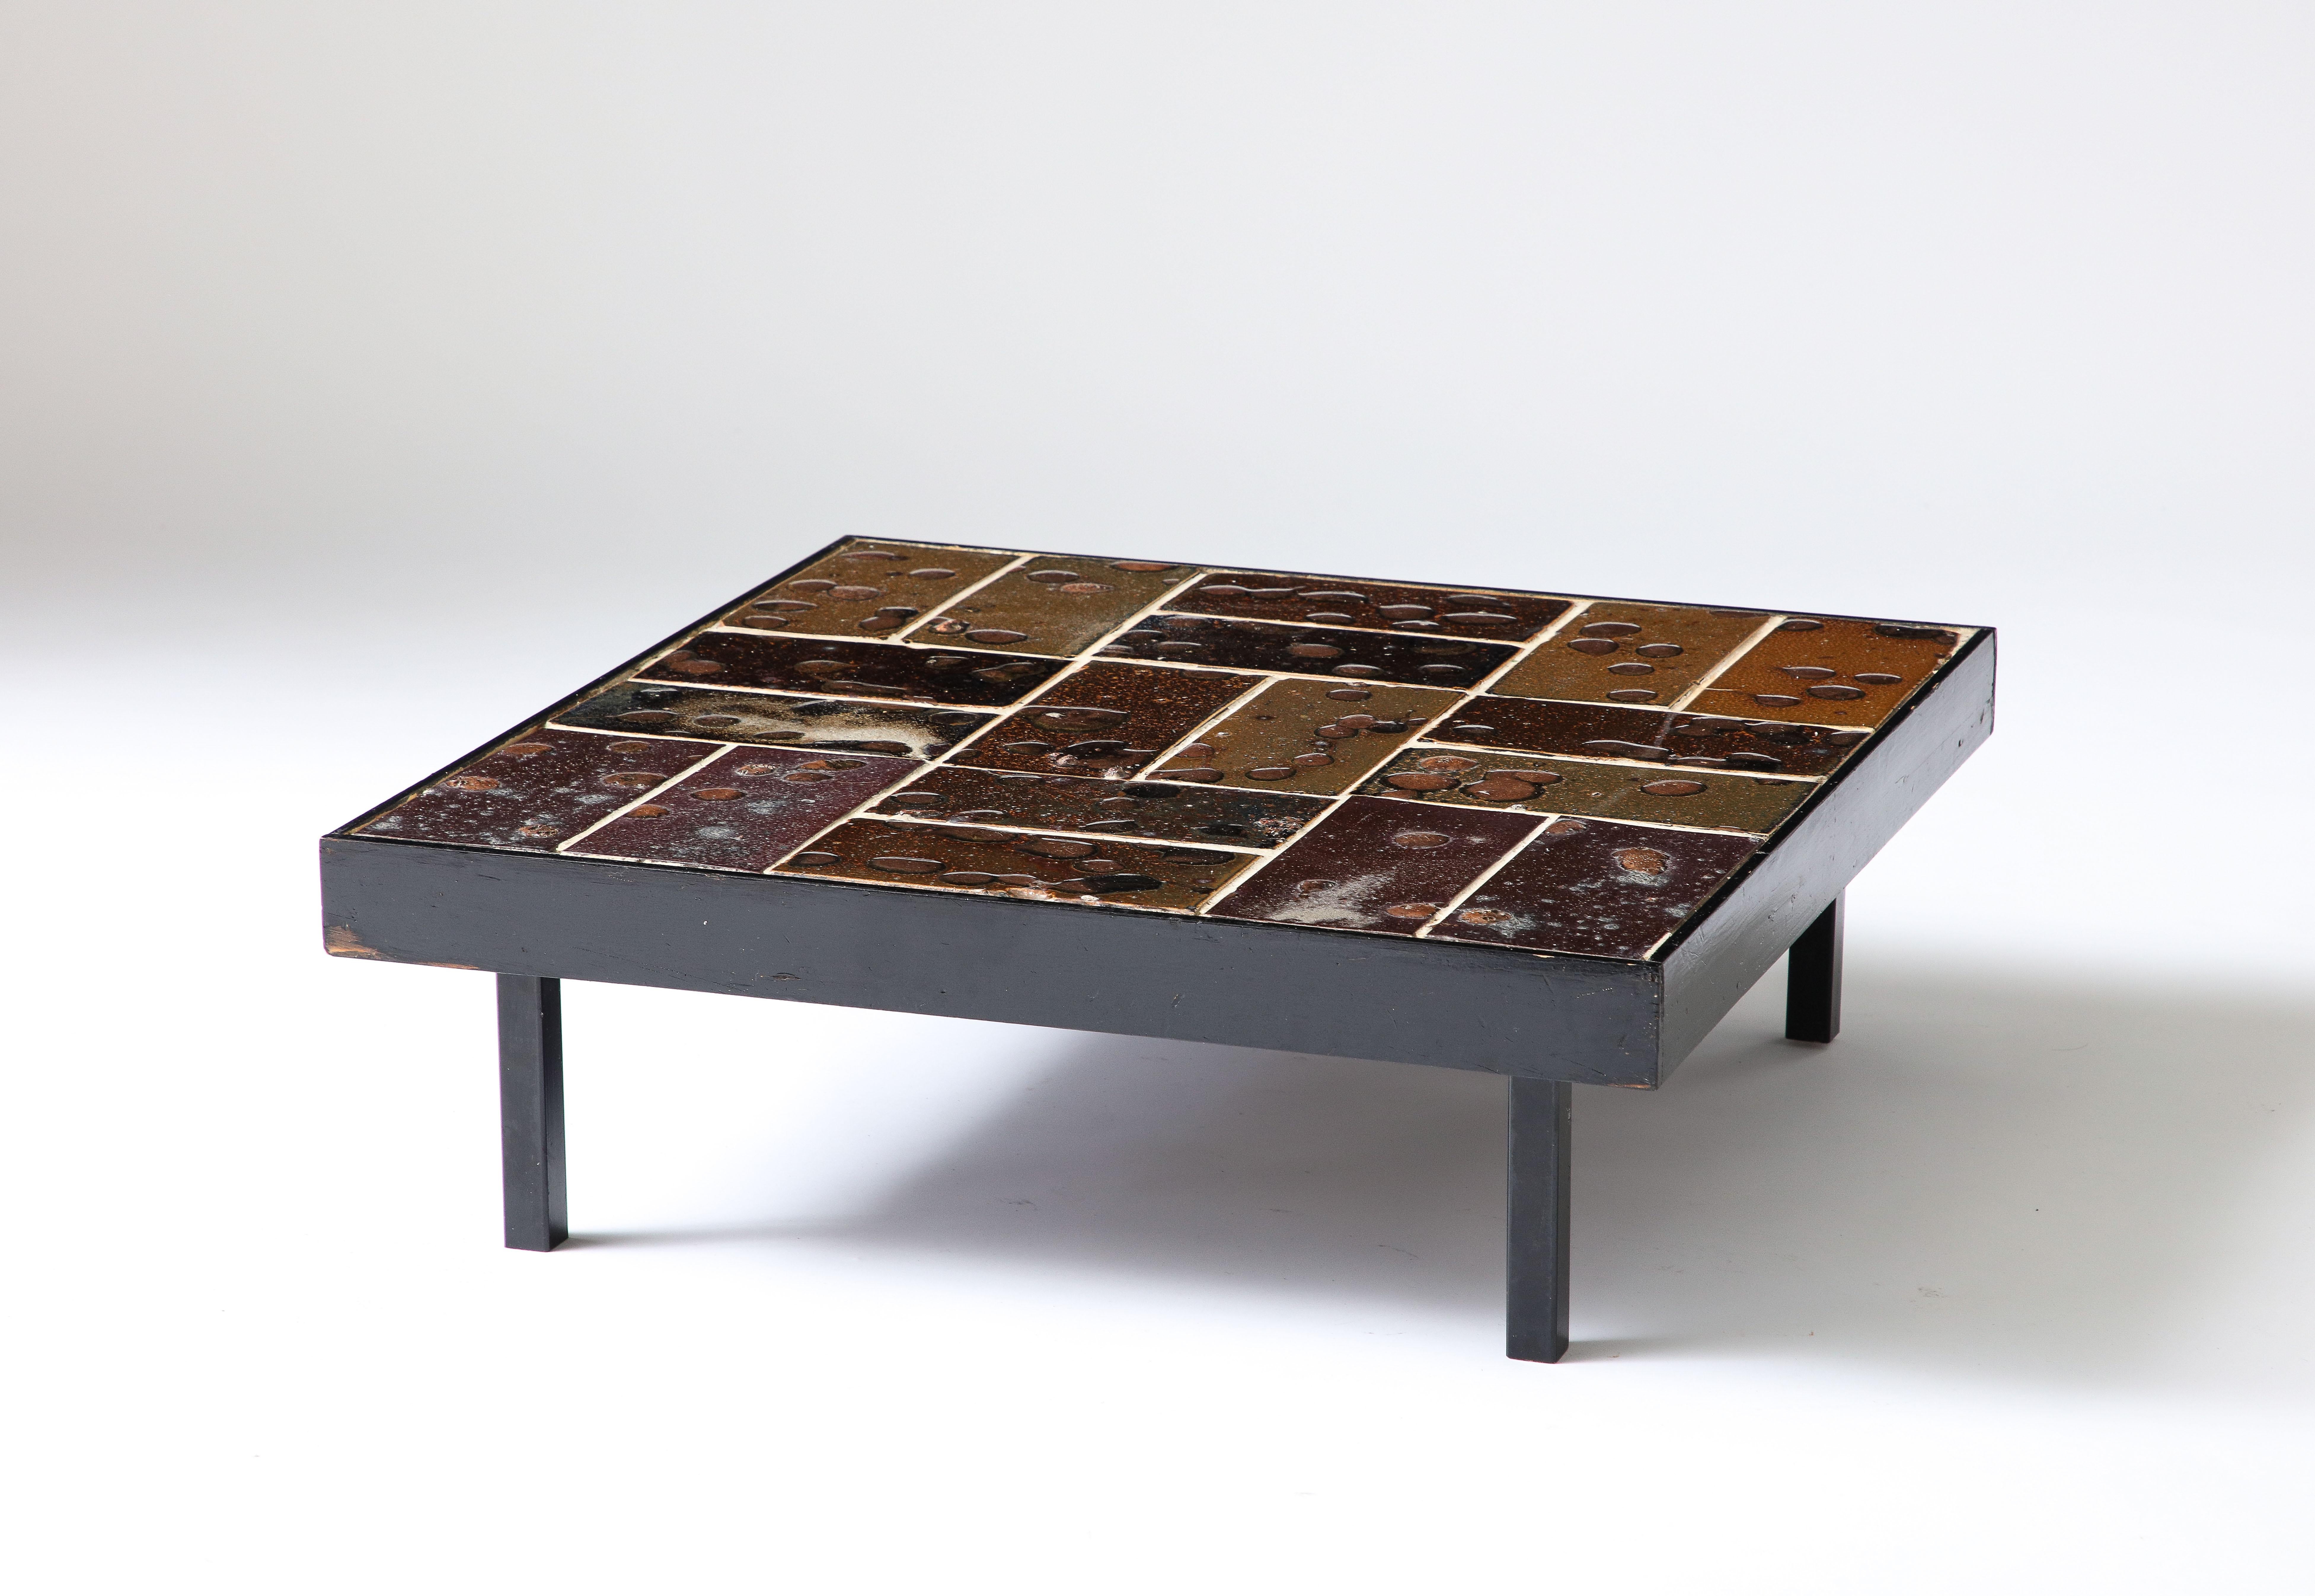 Glazed Ceramic Tile Coffee Table, Belgium, c. 1960 For Sale 2